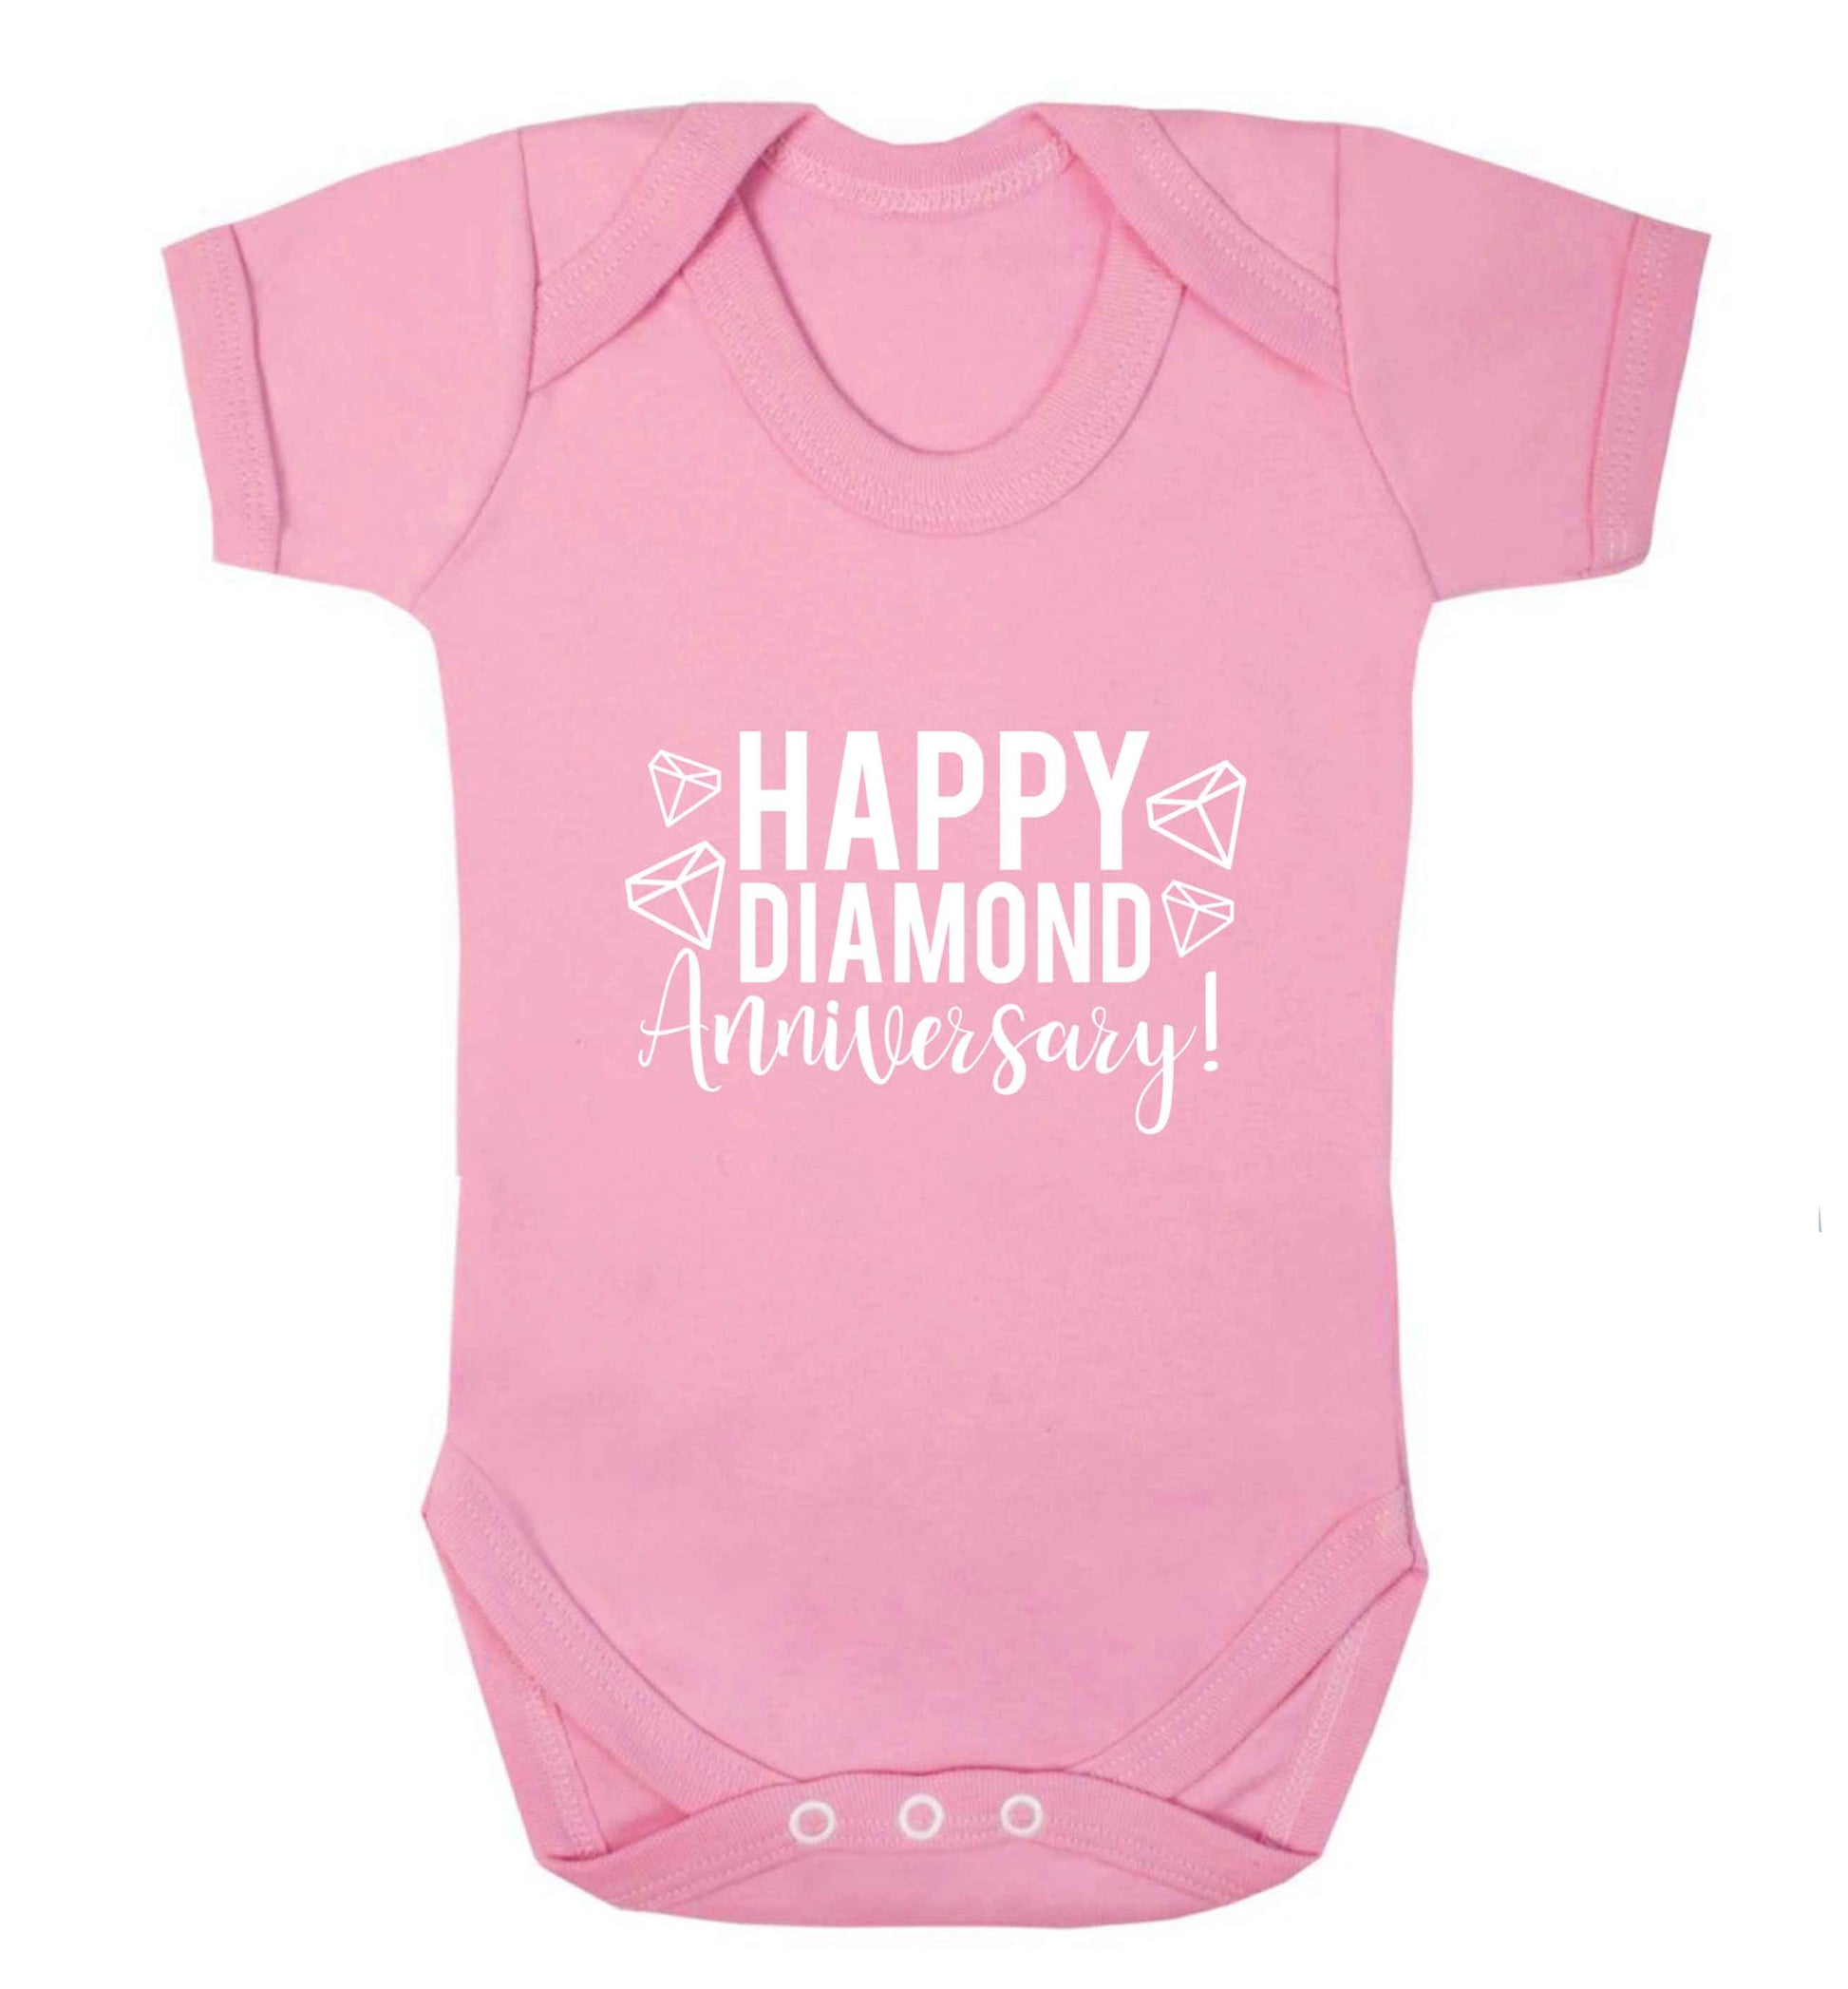 Happy diamond anniversary! baby vest pale pink 18-24 months